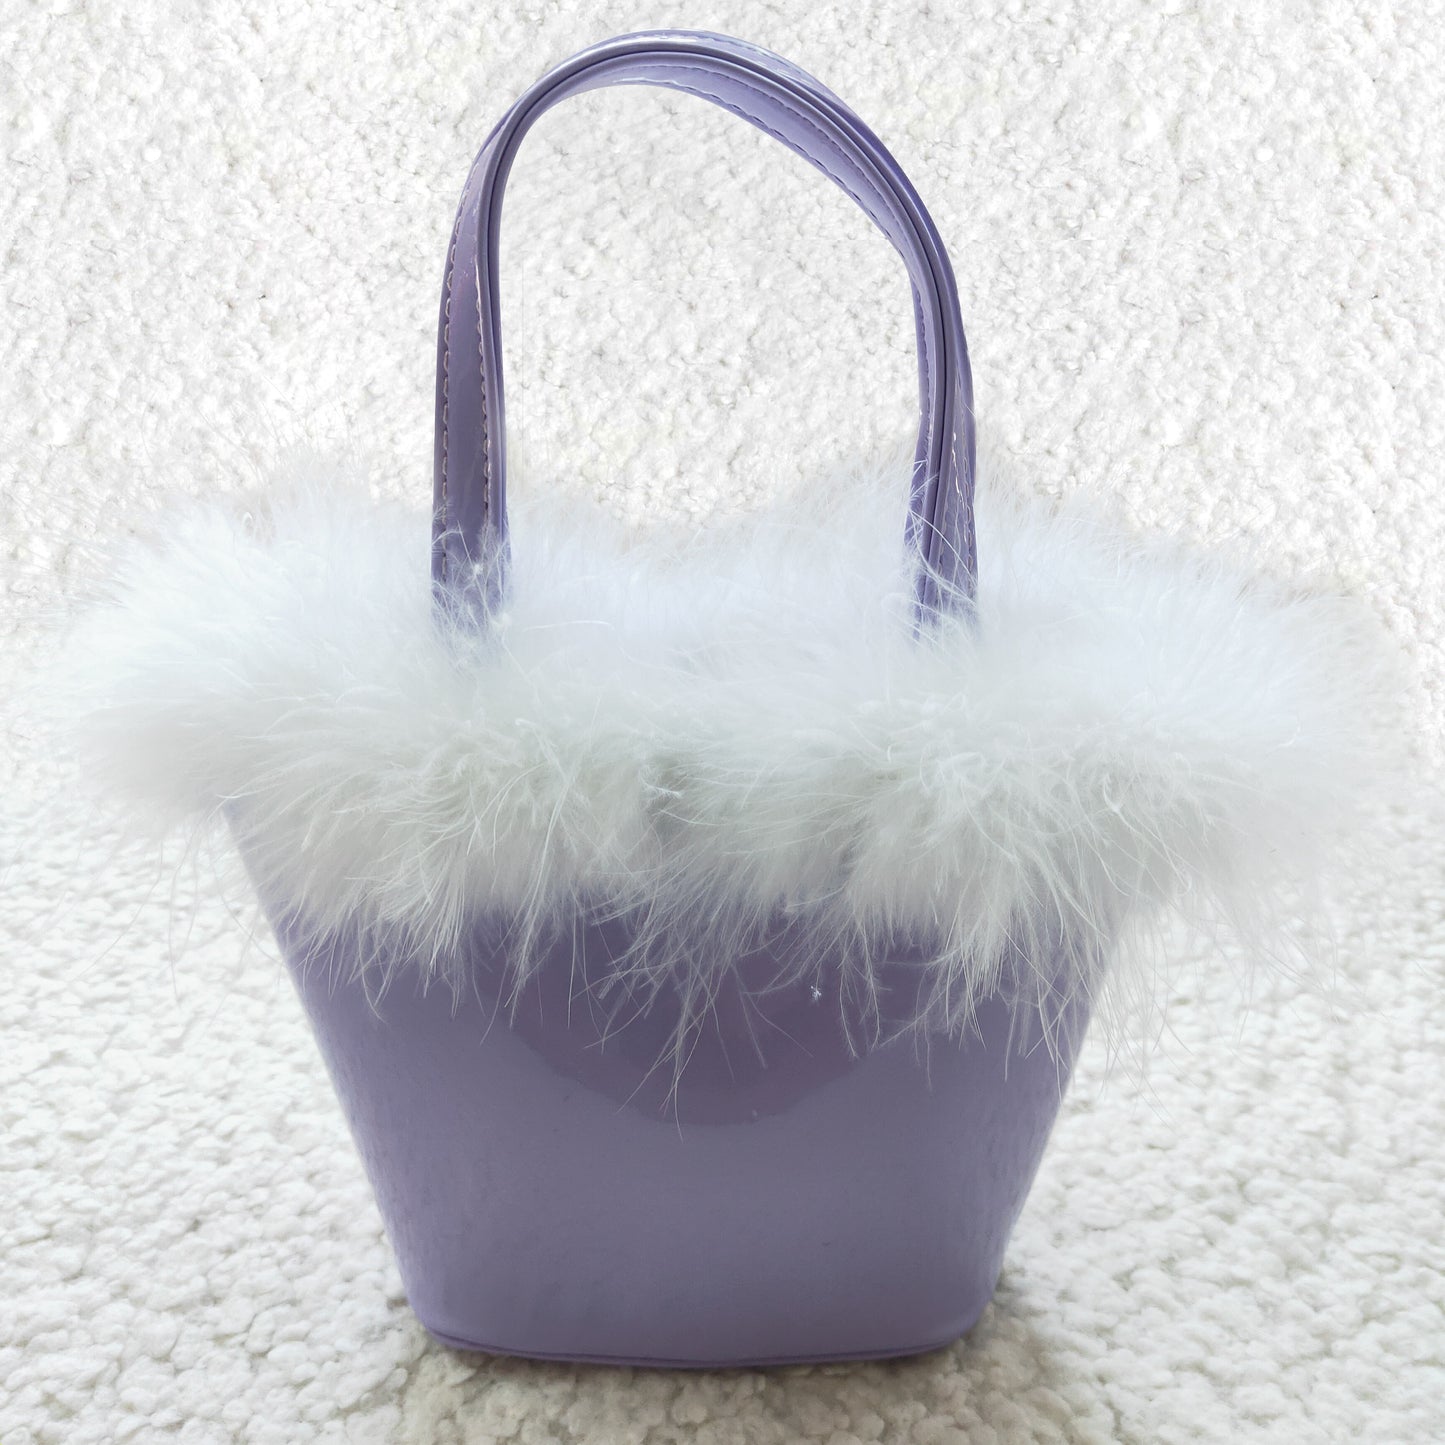 Eatser purple leather handbag